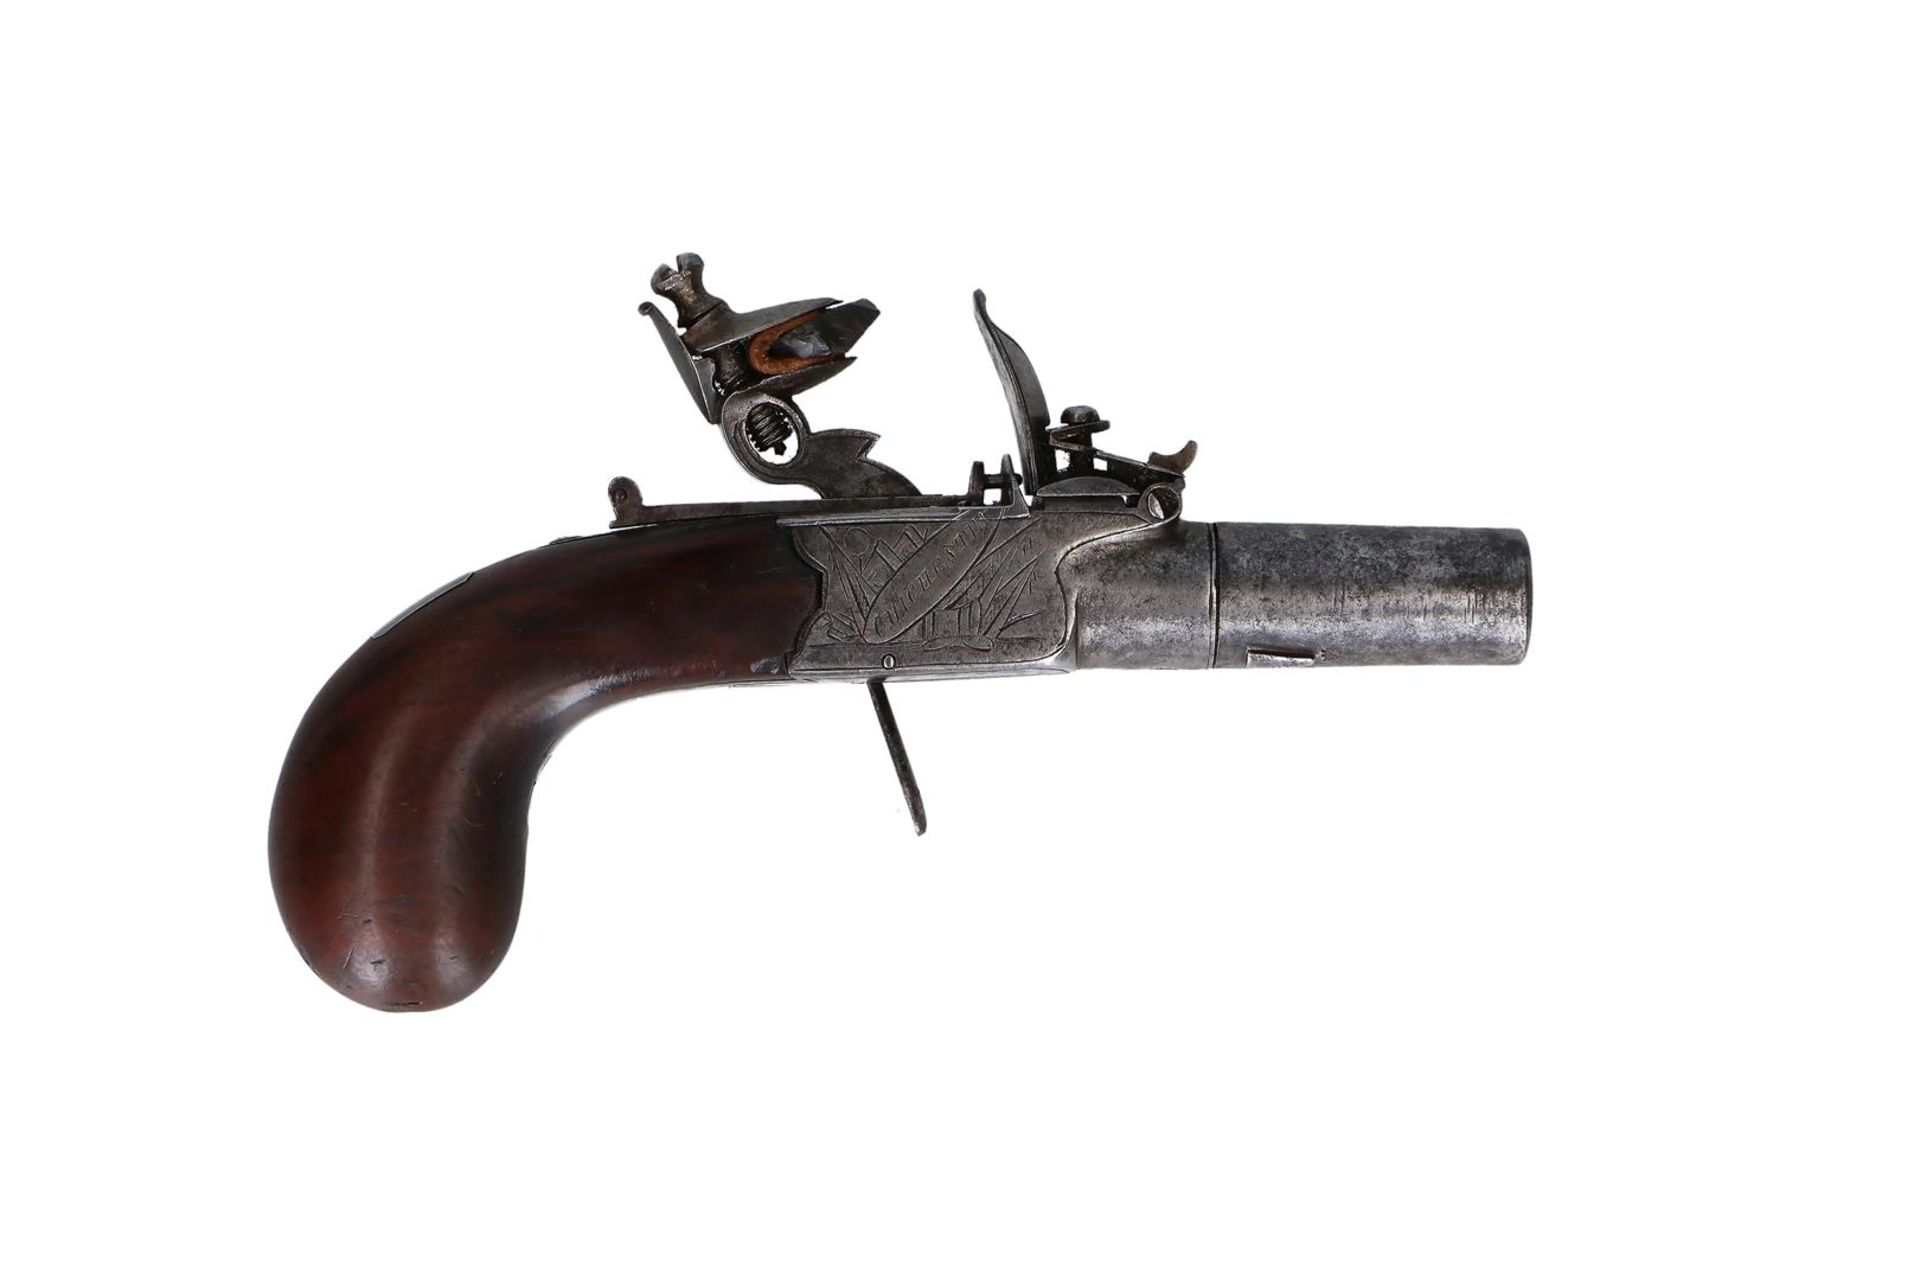 A boxlock flintlock pocket pistol with screw off barrel. Signed Champion on left side of the frame